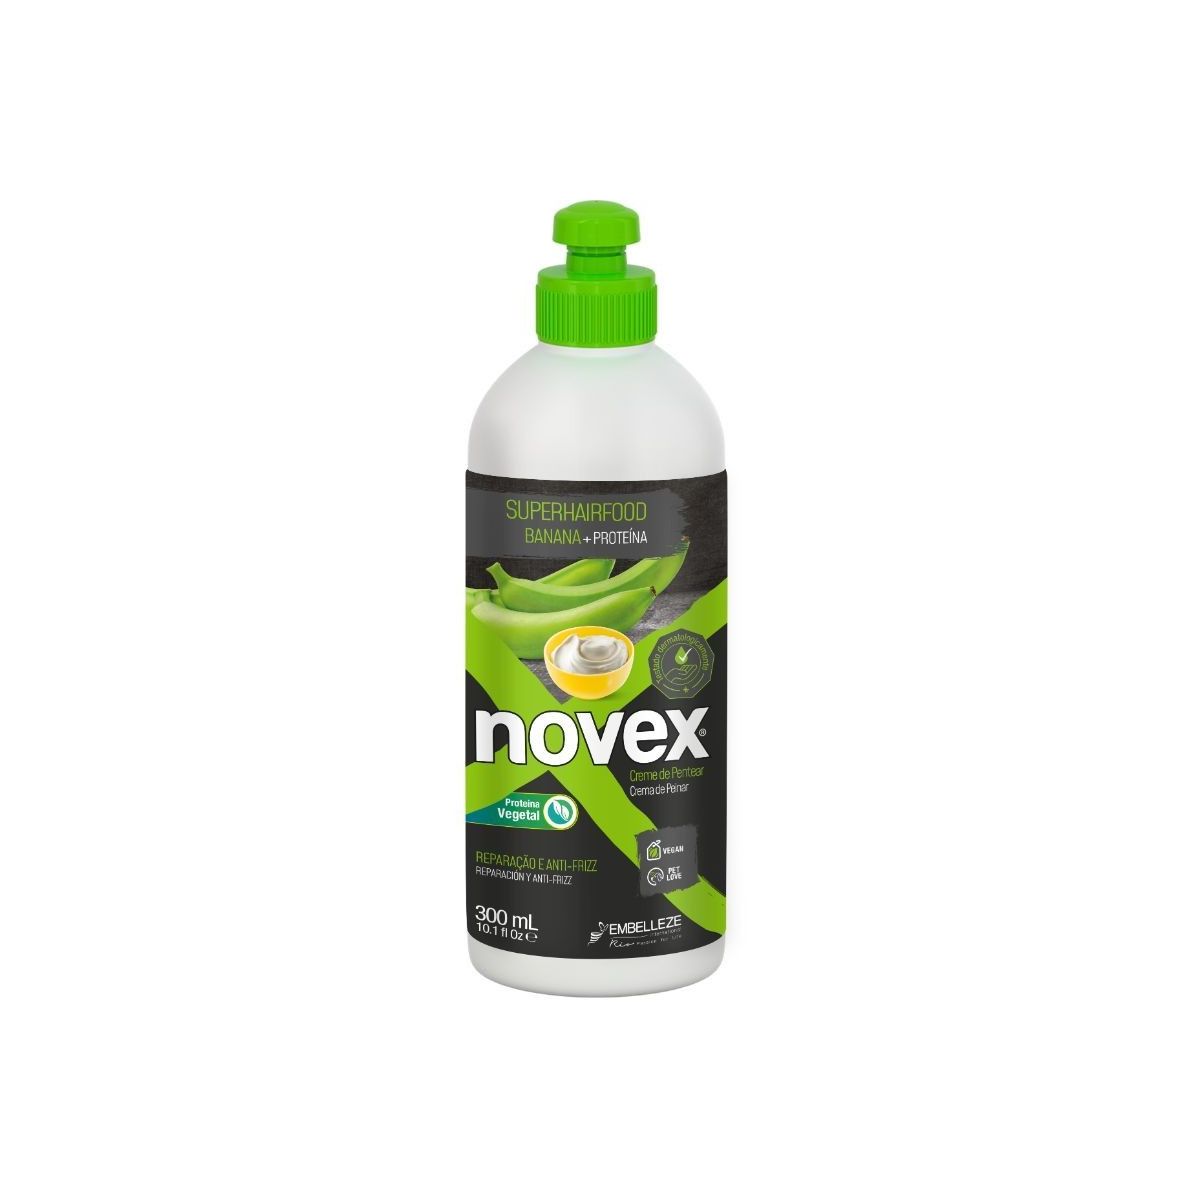 Novex - Super Hair Food  Leave-in Conditioner 300ml